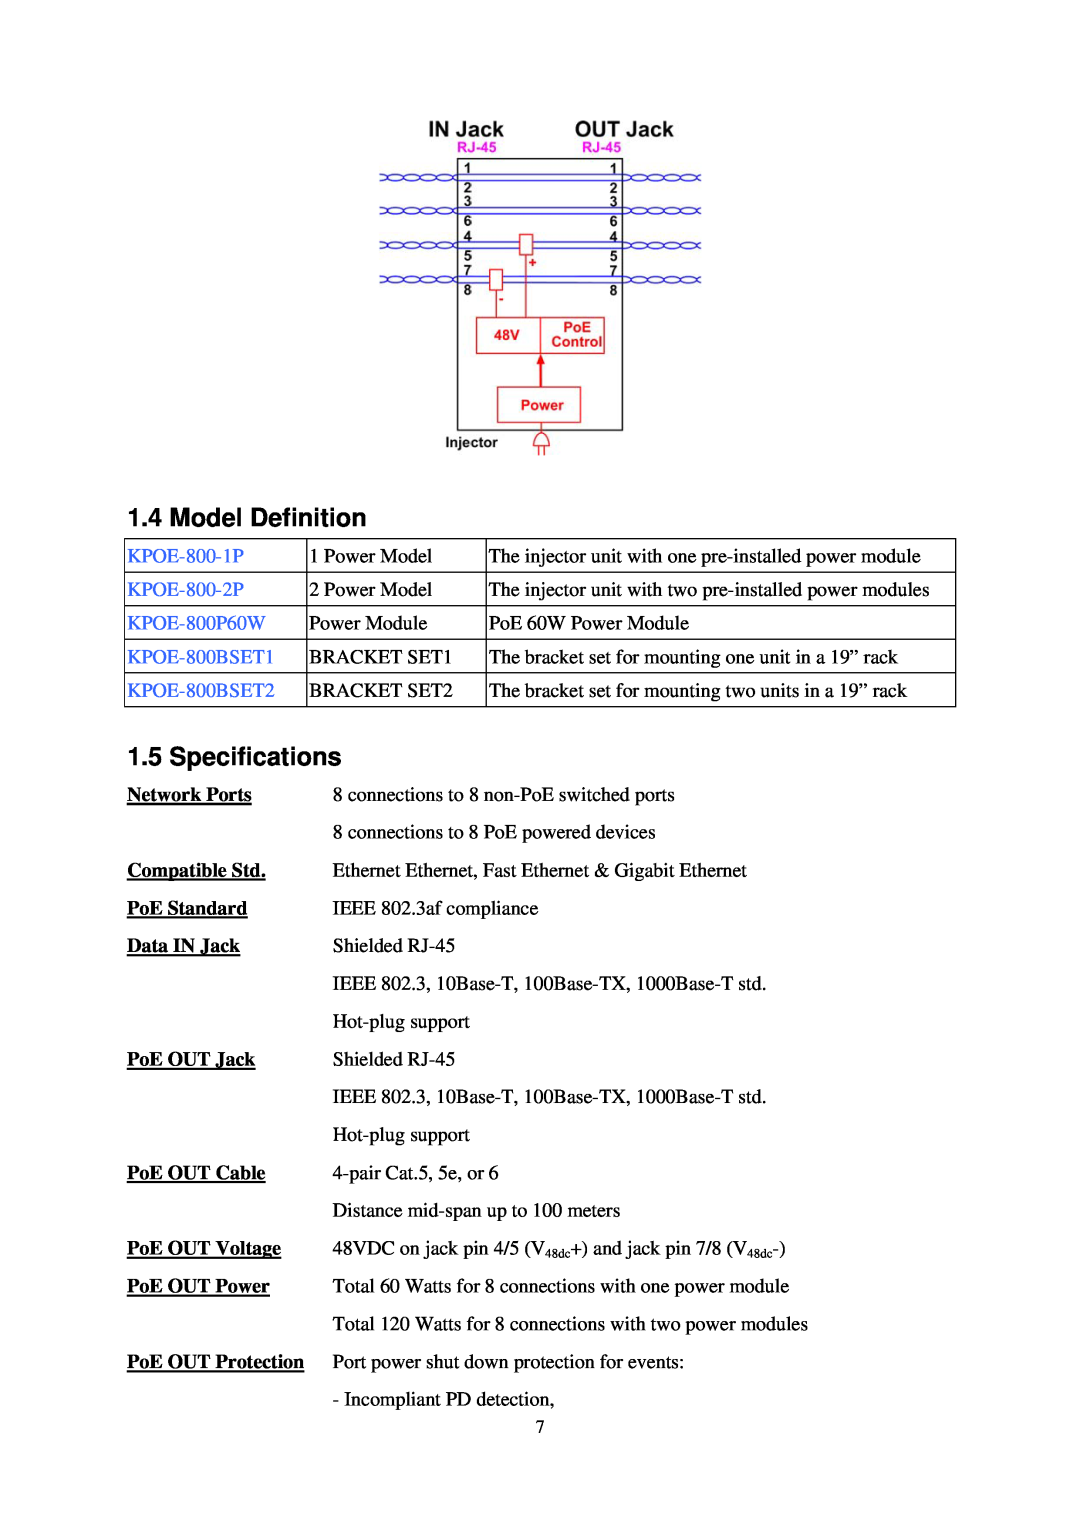 KTI Networks KPOE-800-2P manual Model Definition, Specifications, Network Ports, Compatible Std, PoE Standard, Data IN Jack 